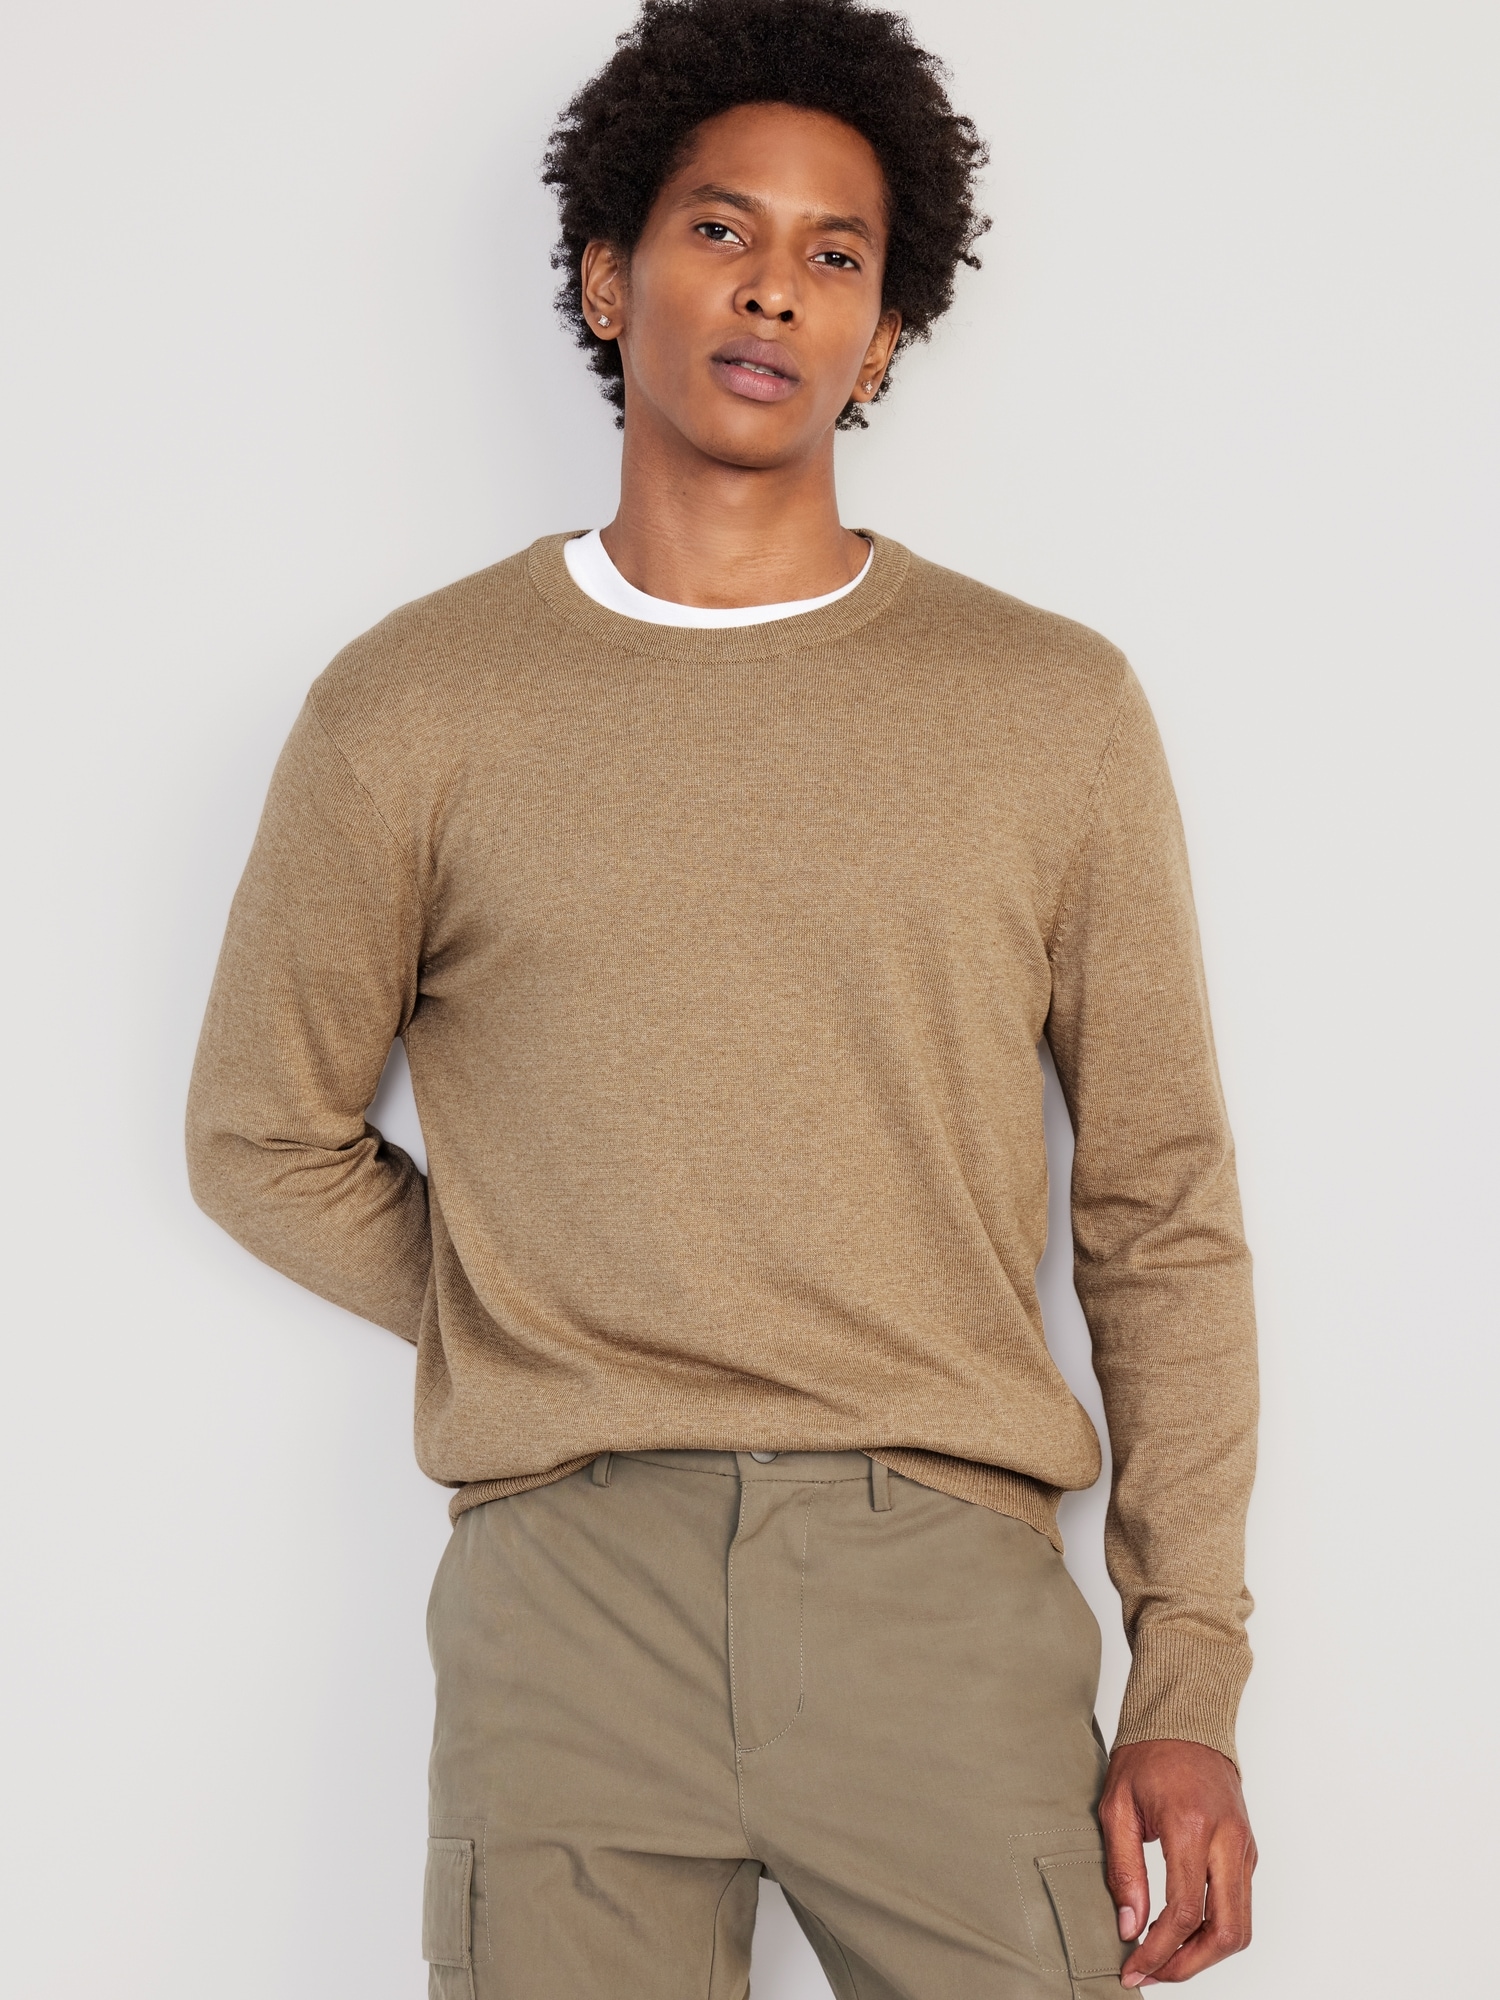 Crew-Neck Sweater for Men